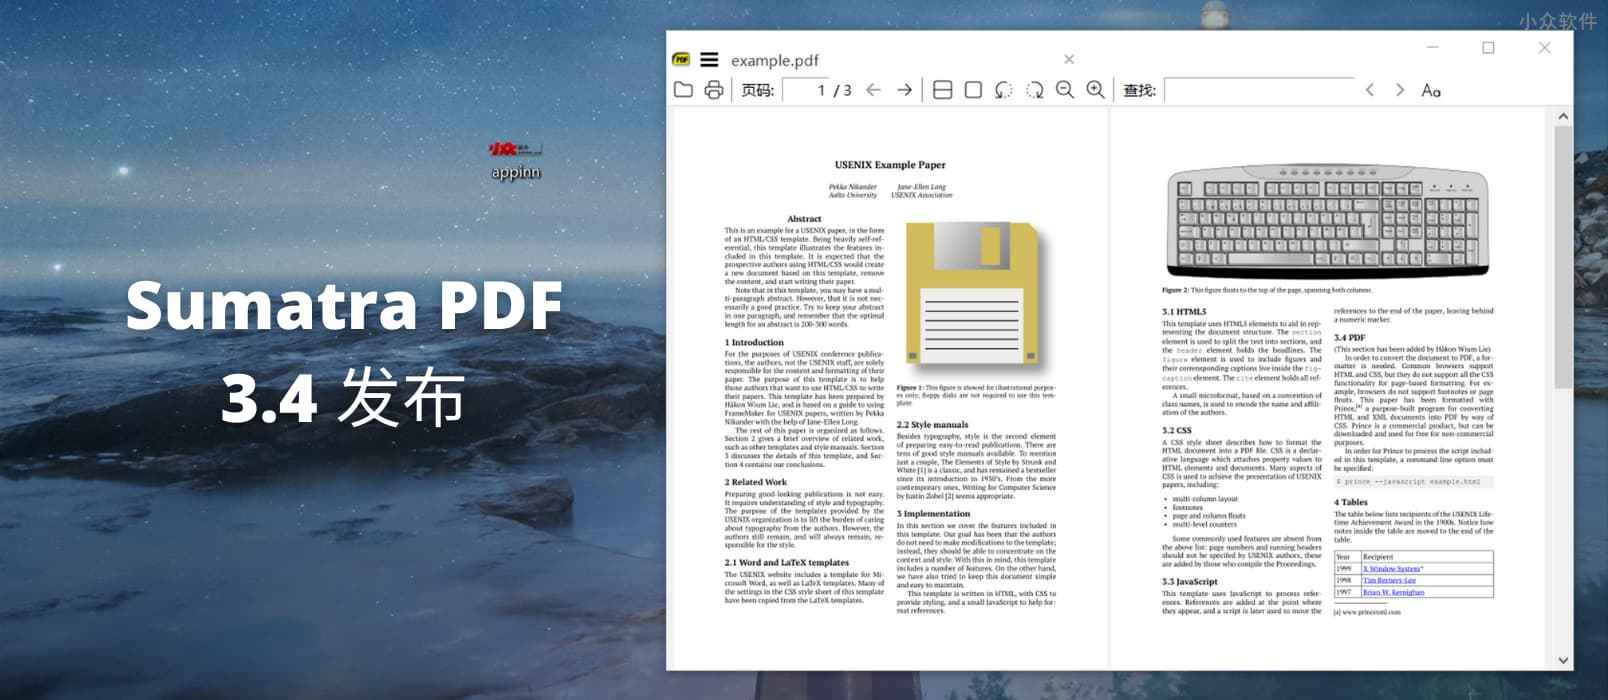 Sumatra PDF 3.4 版本发布，新增命令行、自定义快捷键、mupdf 引擎、网络翻译等功能